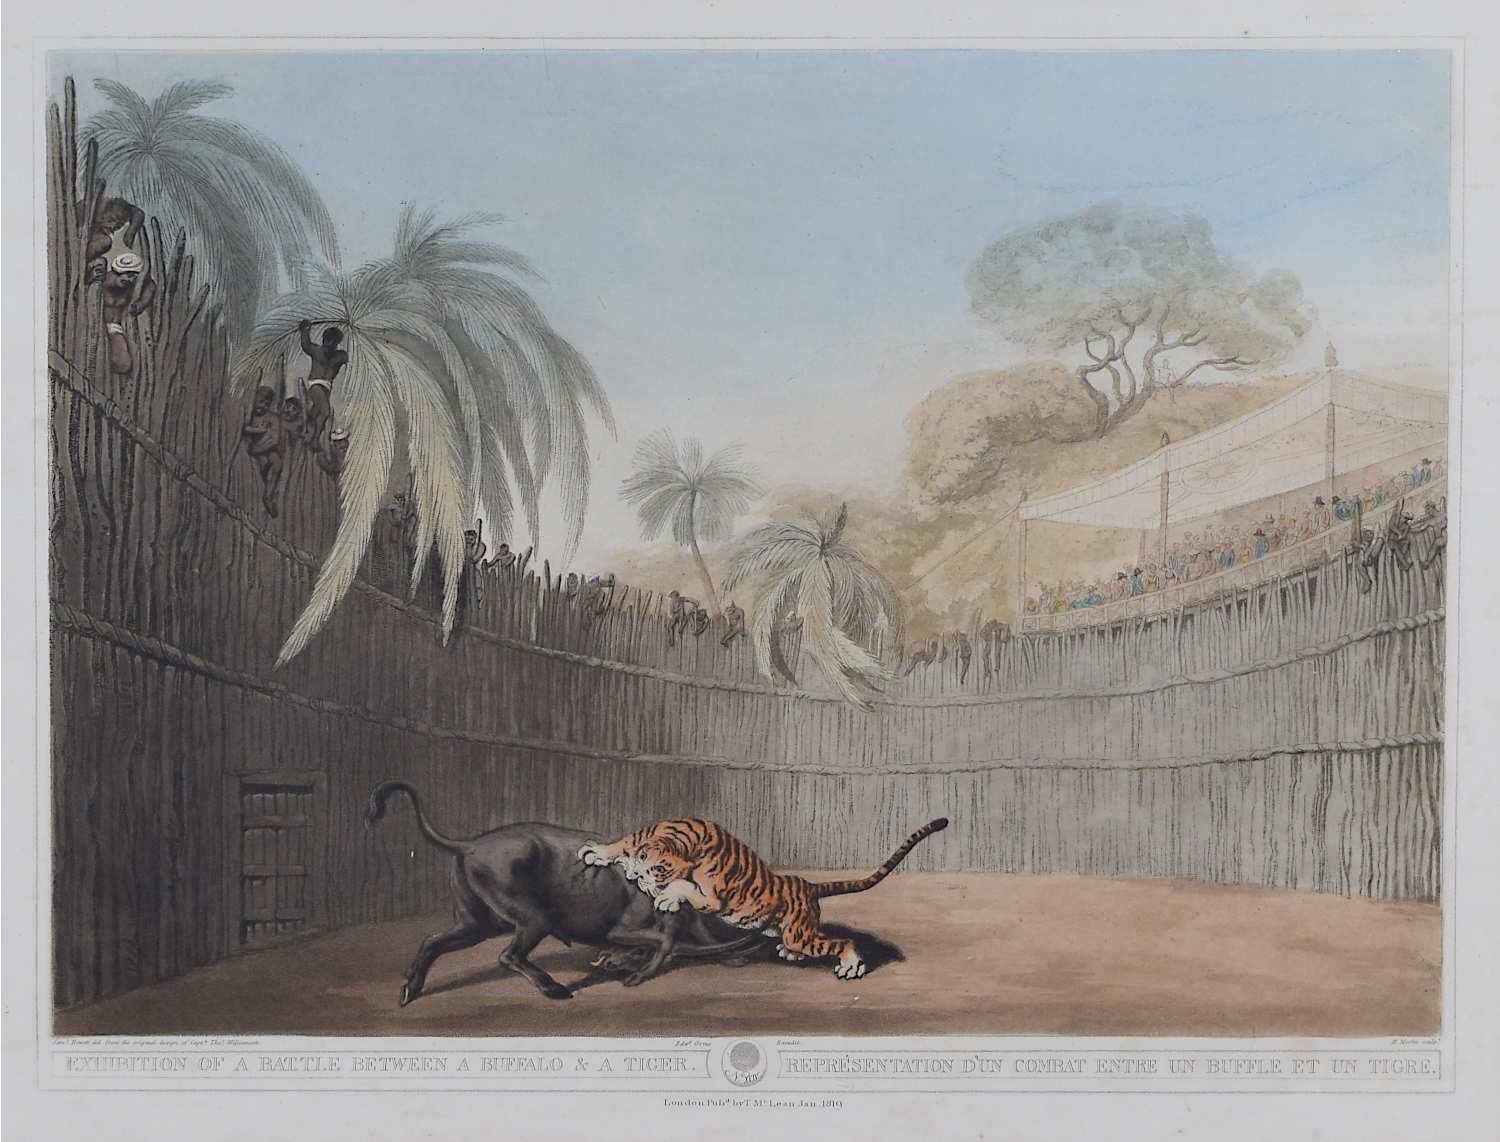 Samuel Howitt: 'Battle between Buffalo and Tiger' print after Thomas Williamson